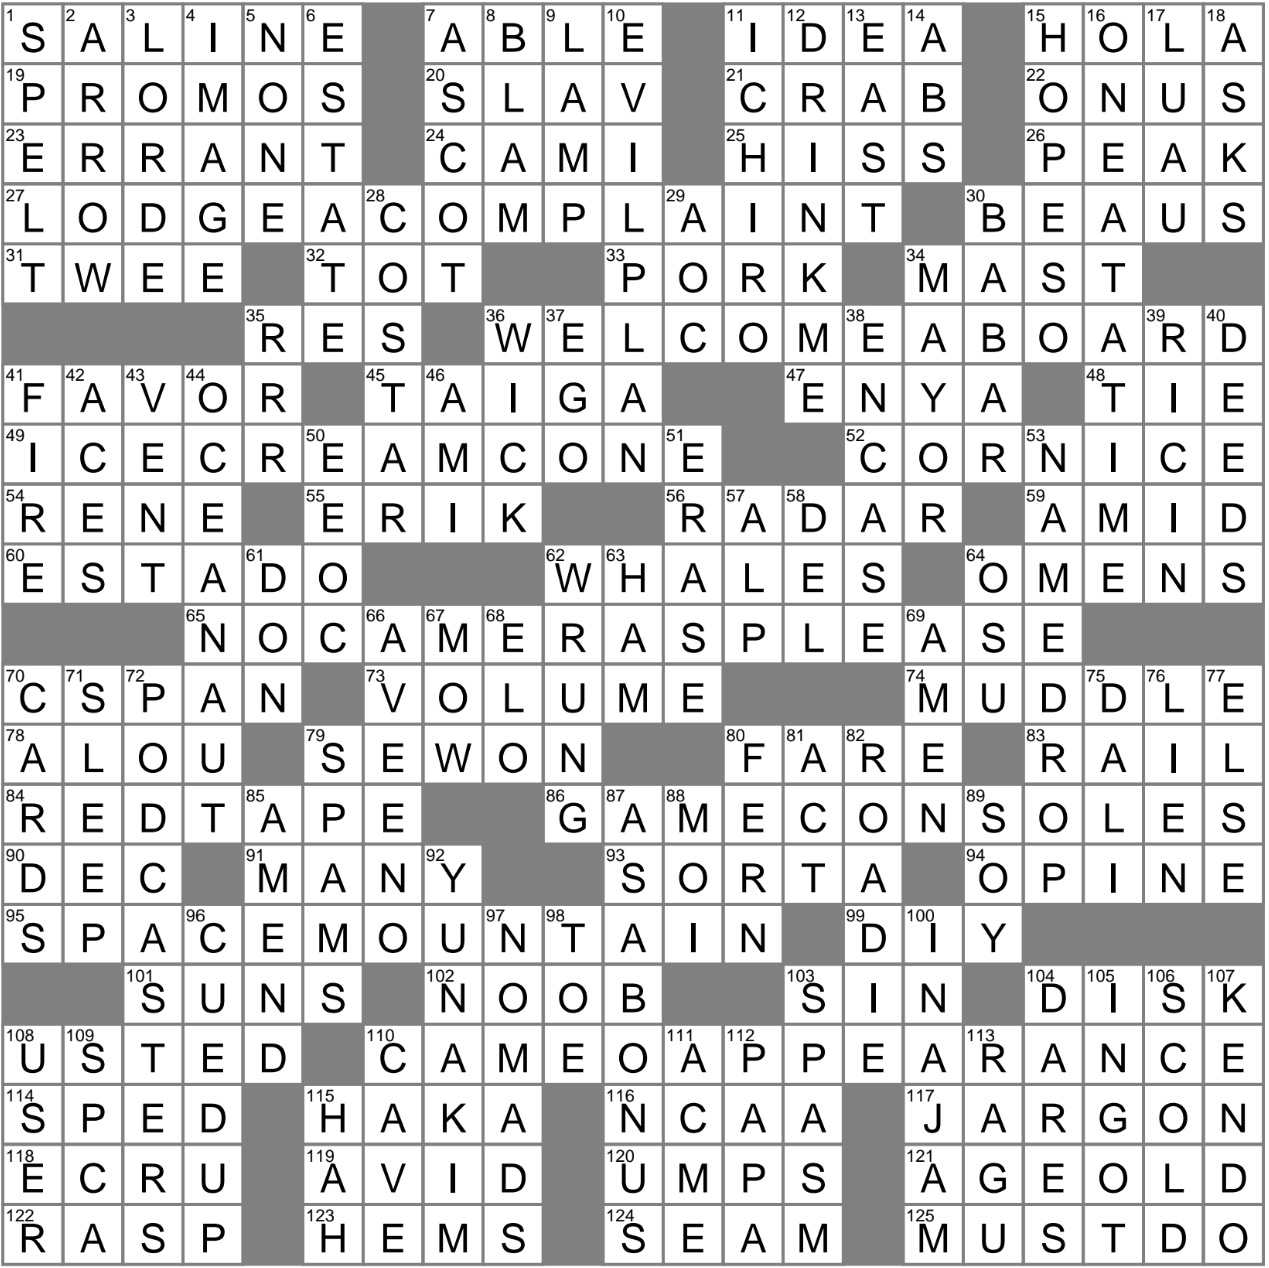 LA Times Crossword 23 Jul 23 Sunday LAXCrossword com